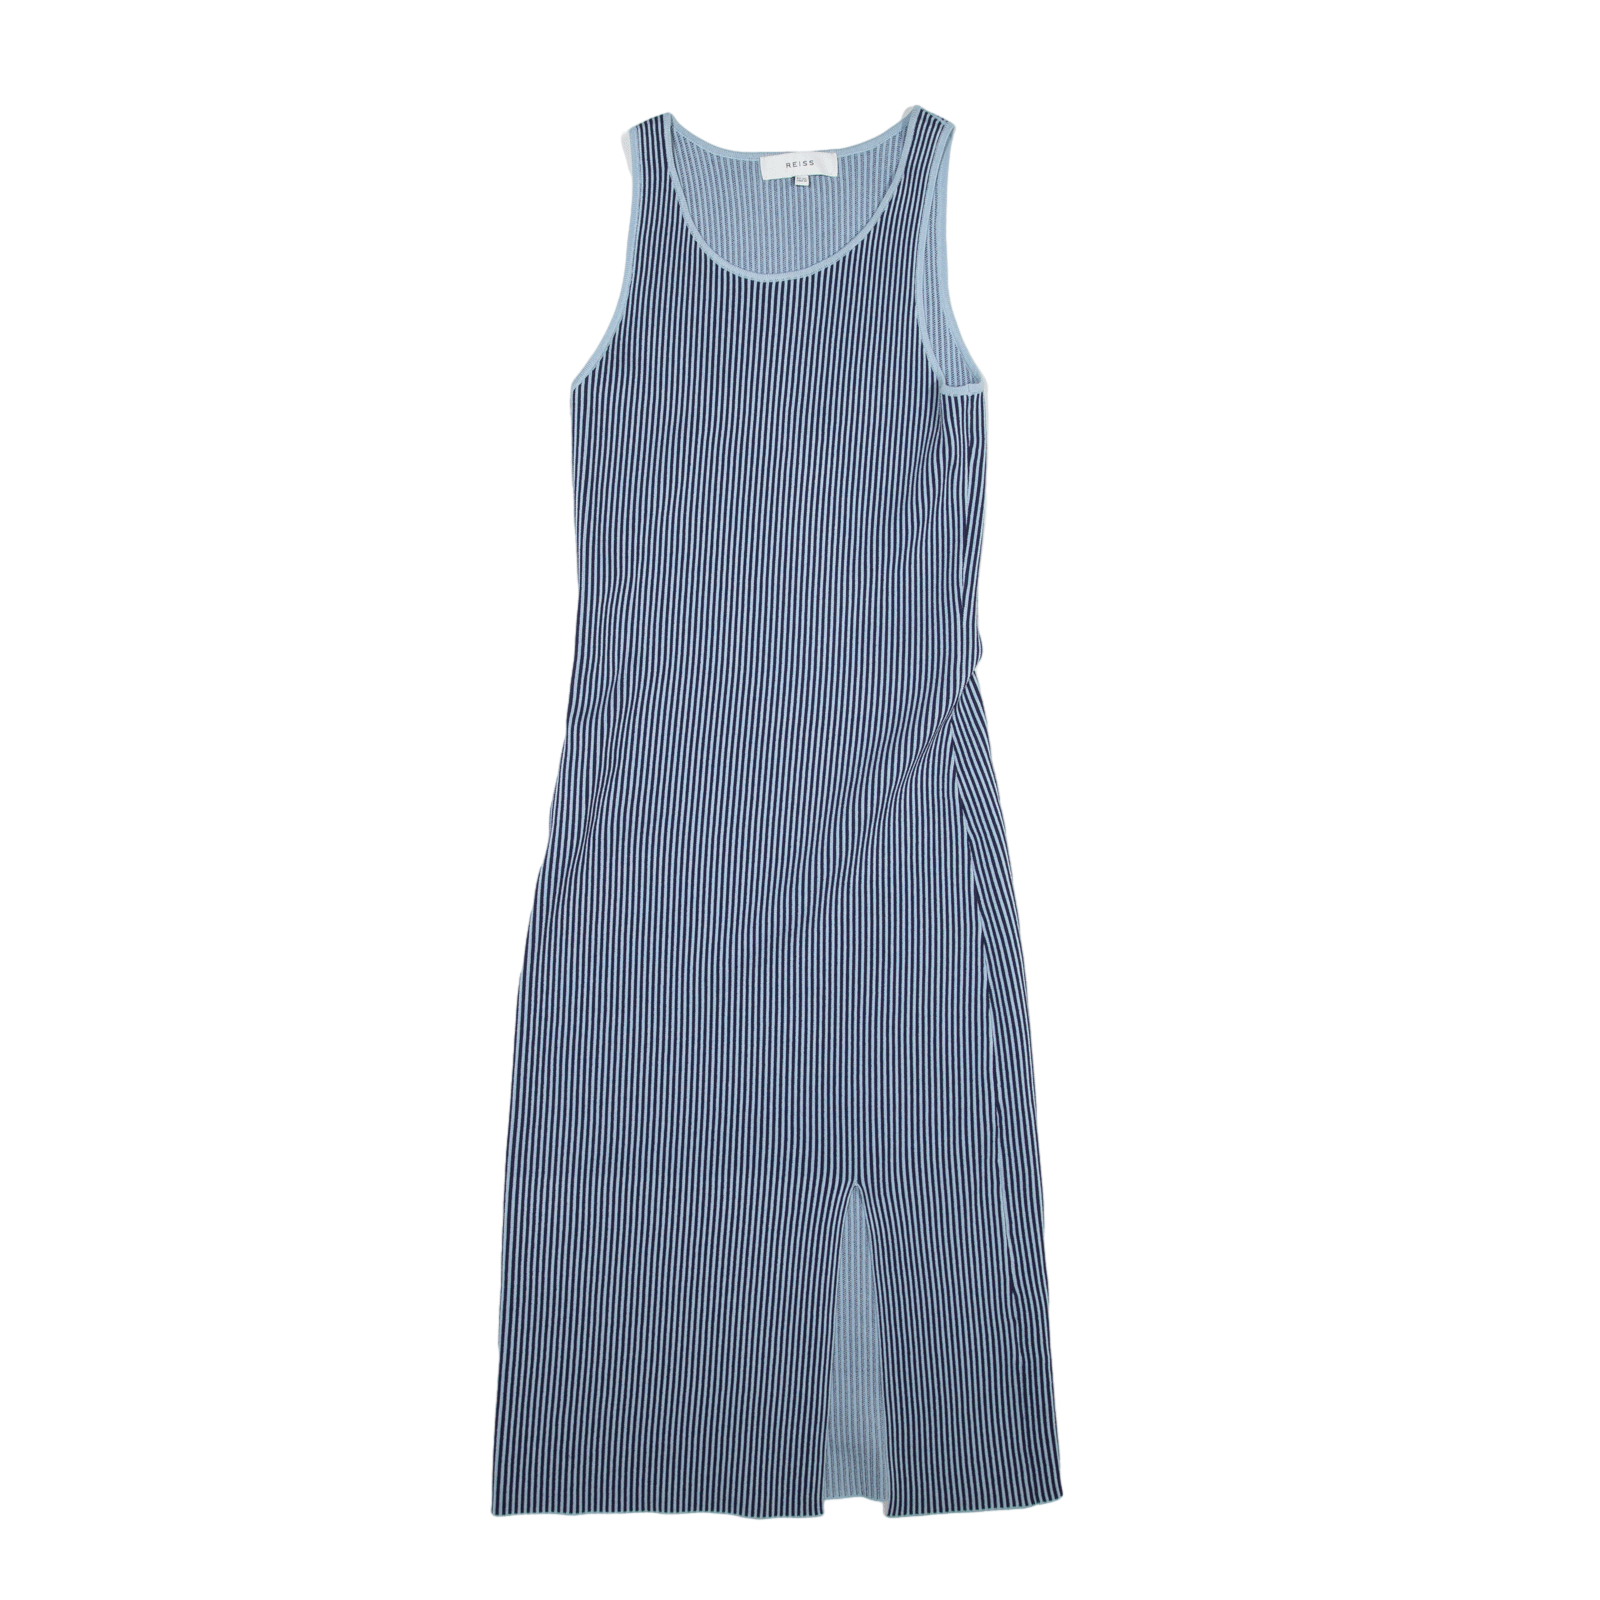 REISS Knit Bodycon Dress Blue Striped Sleeveless Knee Length Womens UK ...